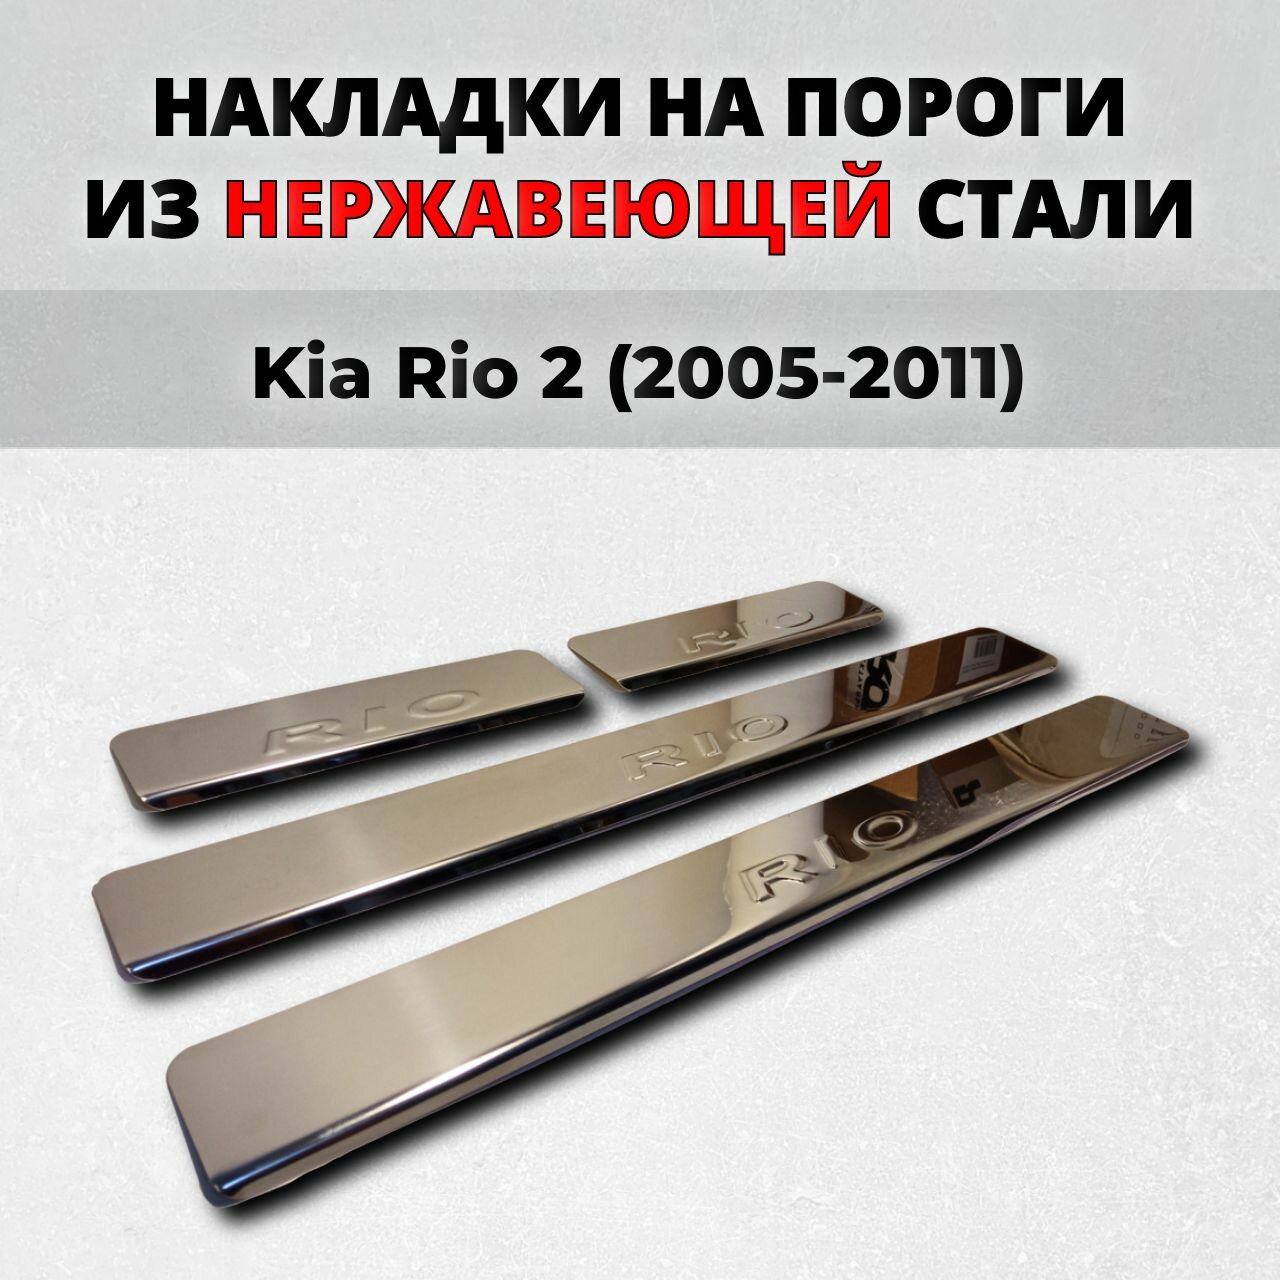 Накладки на пороги Киа Рио 2 2005-2011 из нержавеющей стали Kia Rio 2